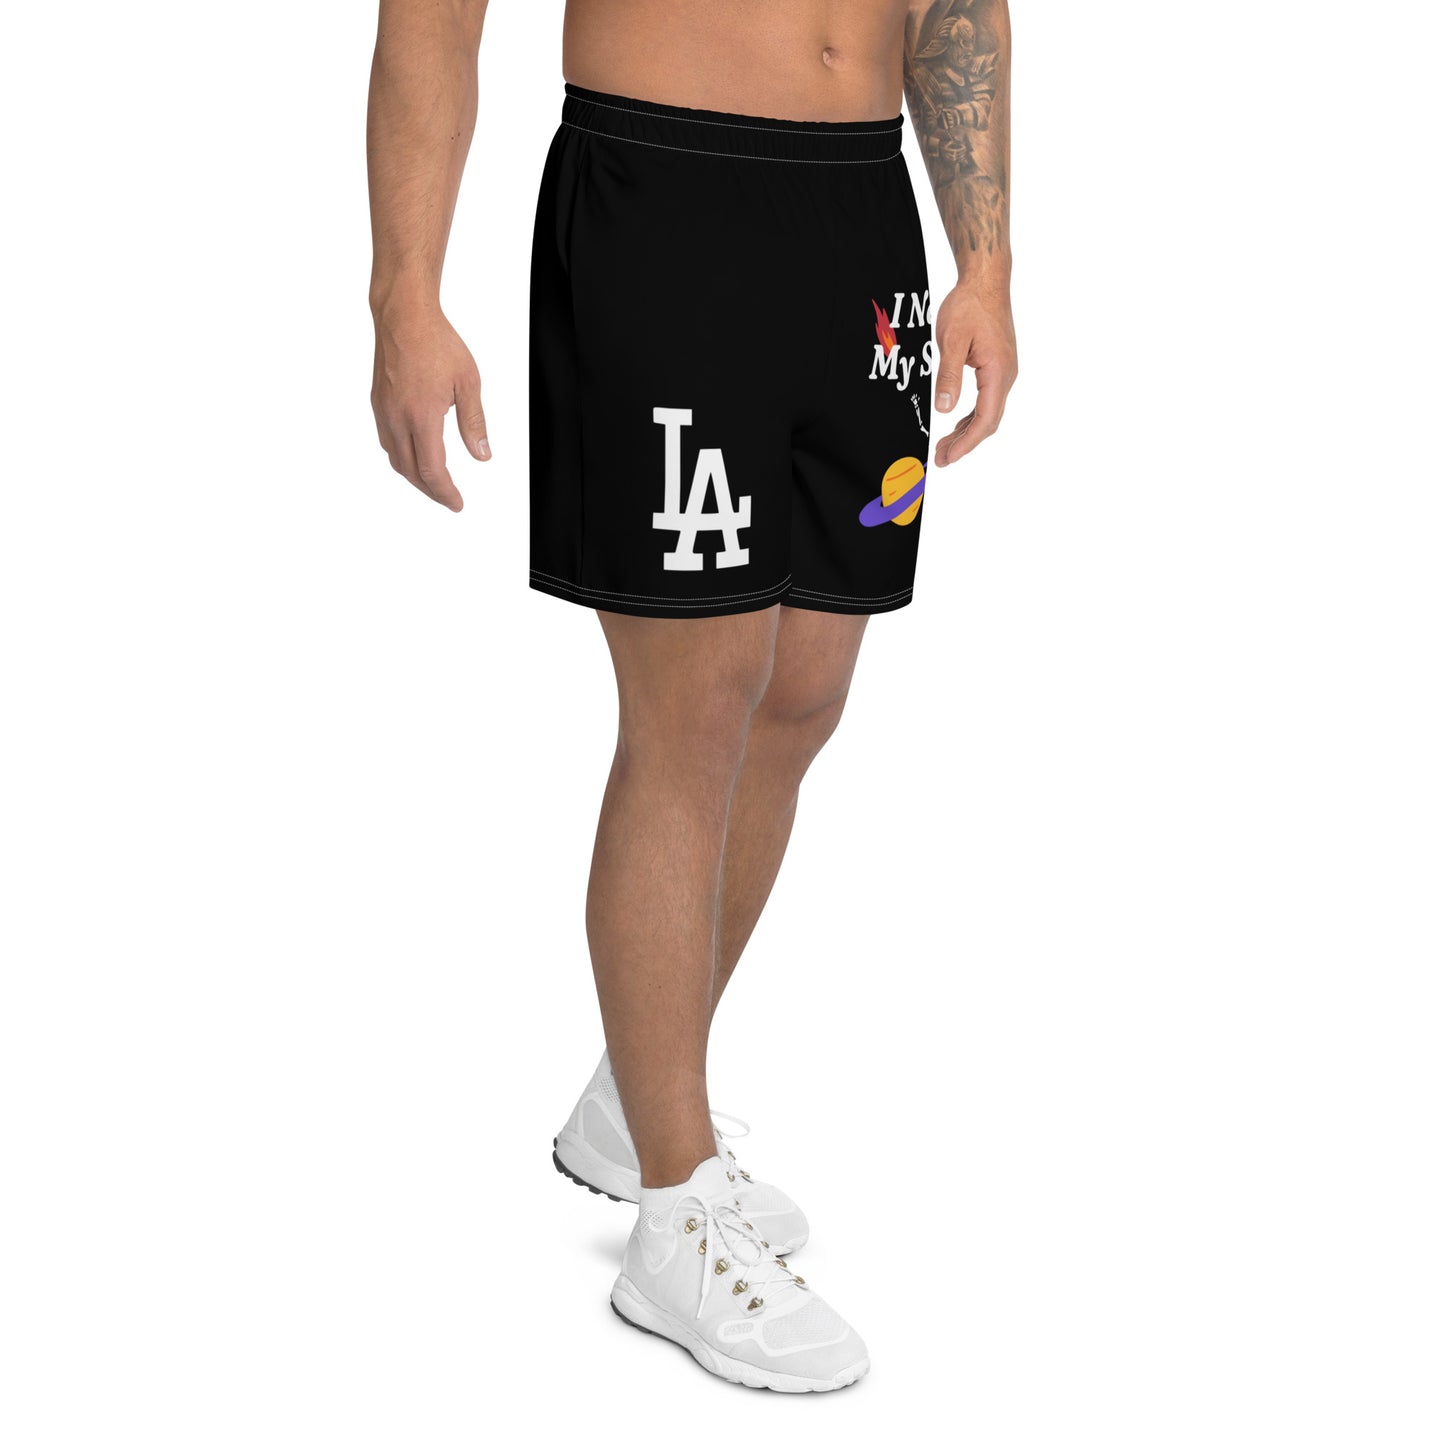 LA Athletic Shorts